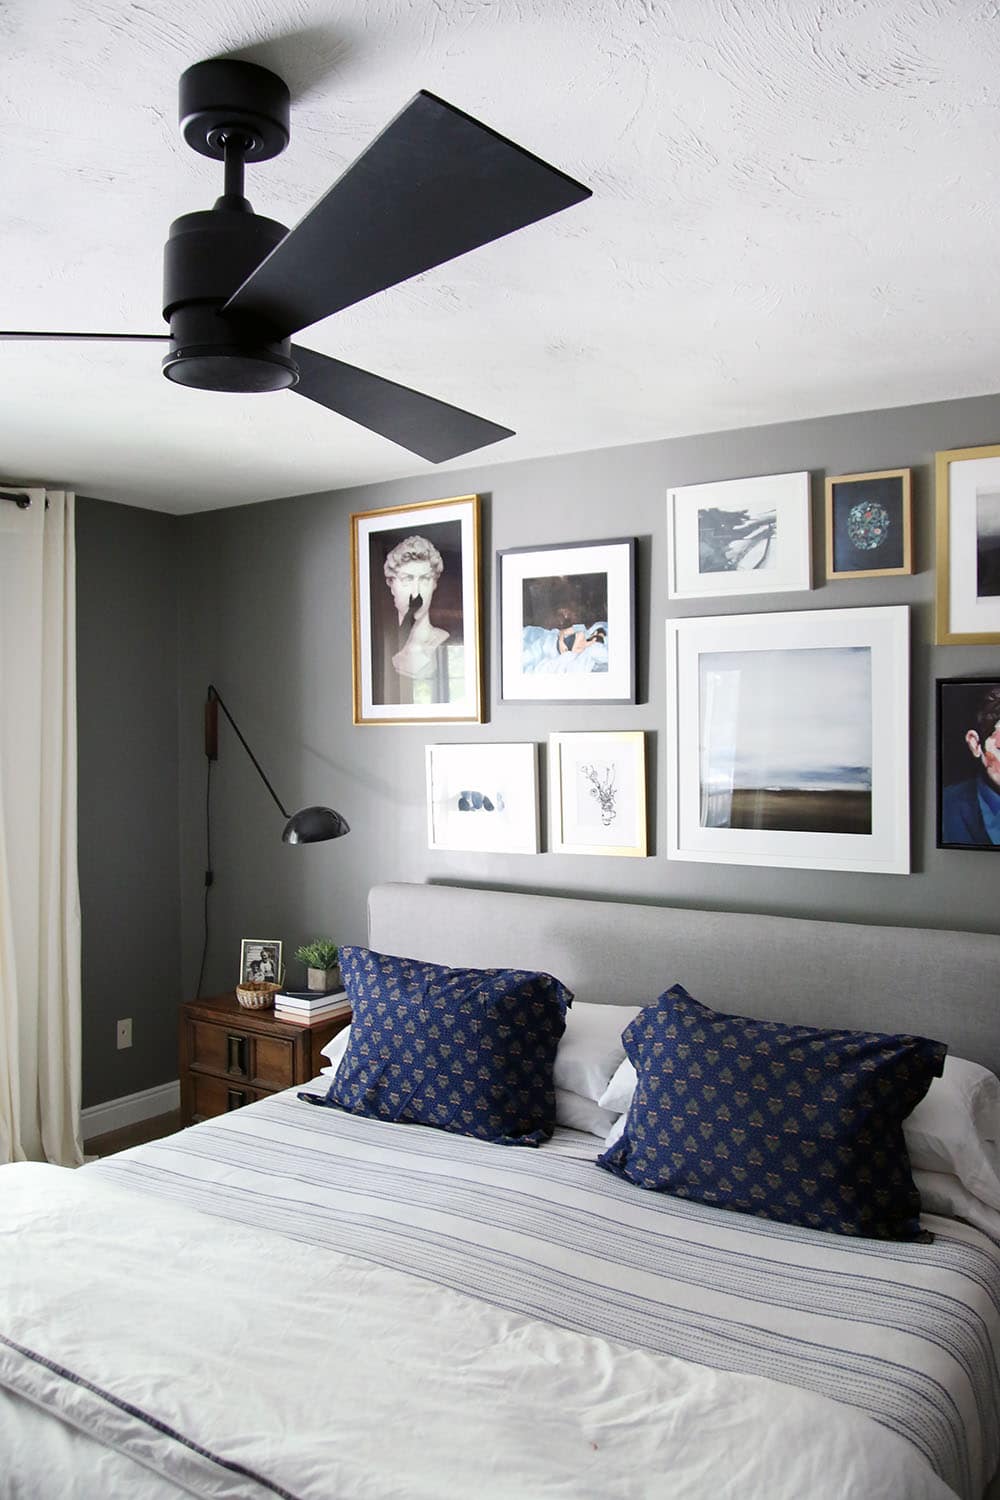 Breeze of Comfort: Stylish Bedroom Ceiling Fans